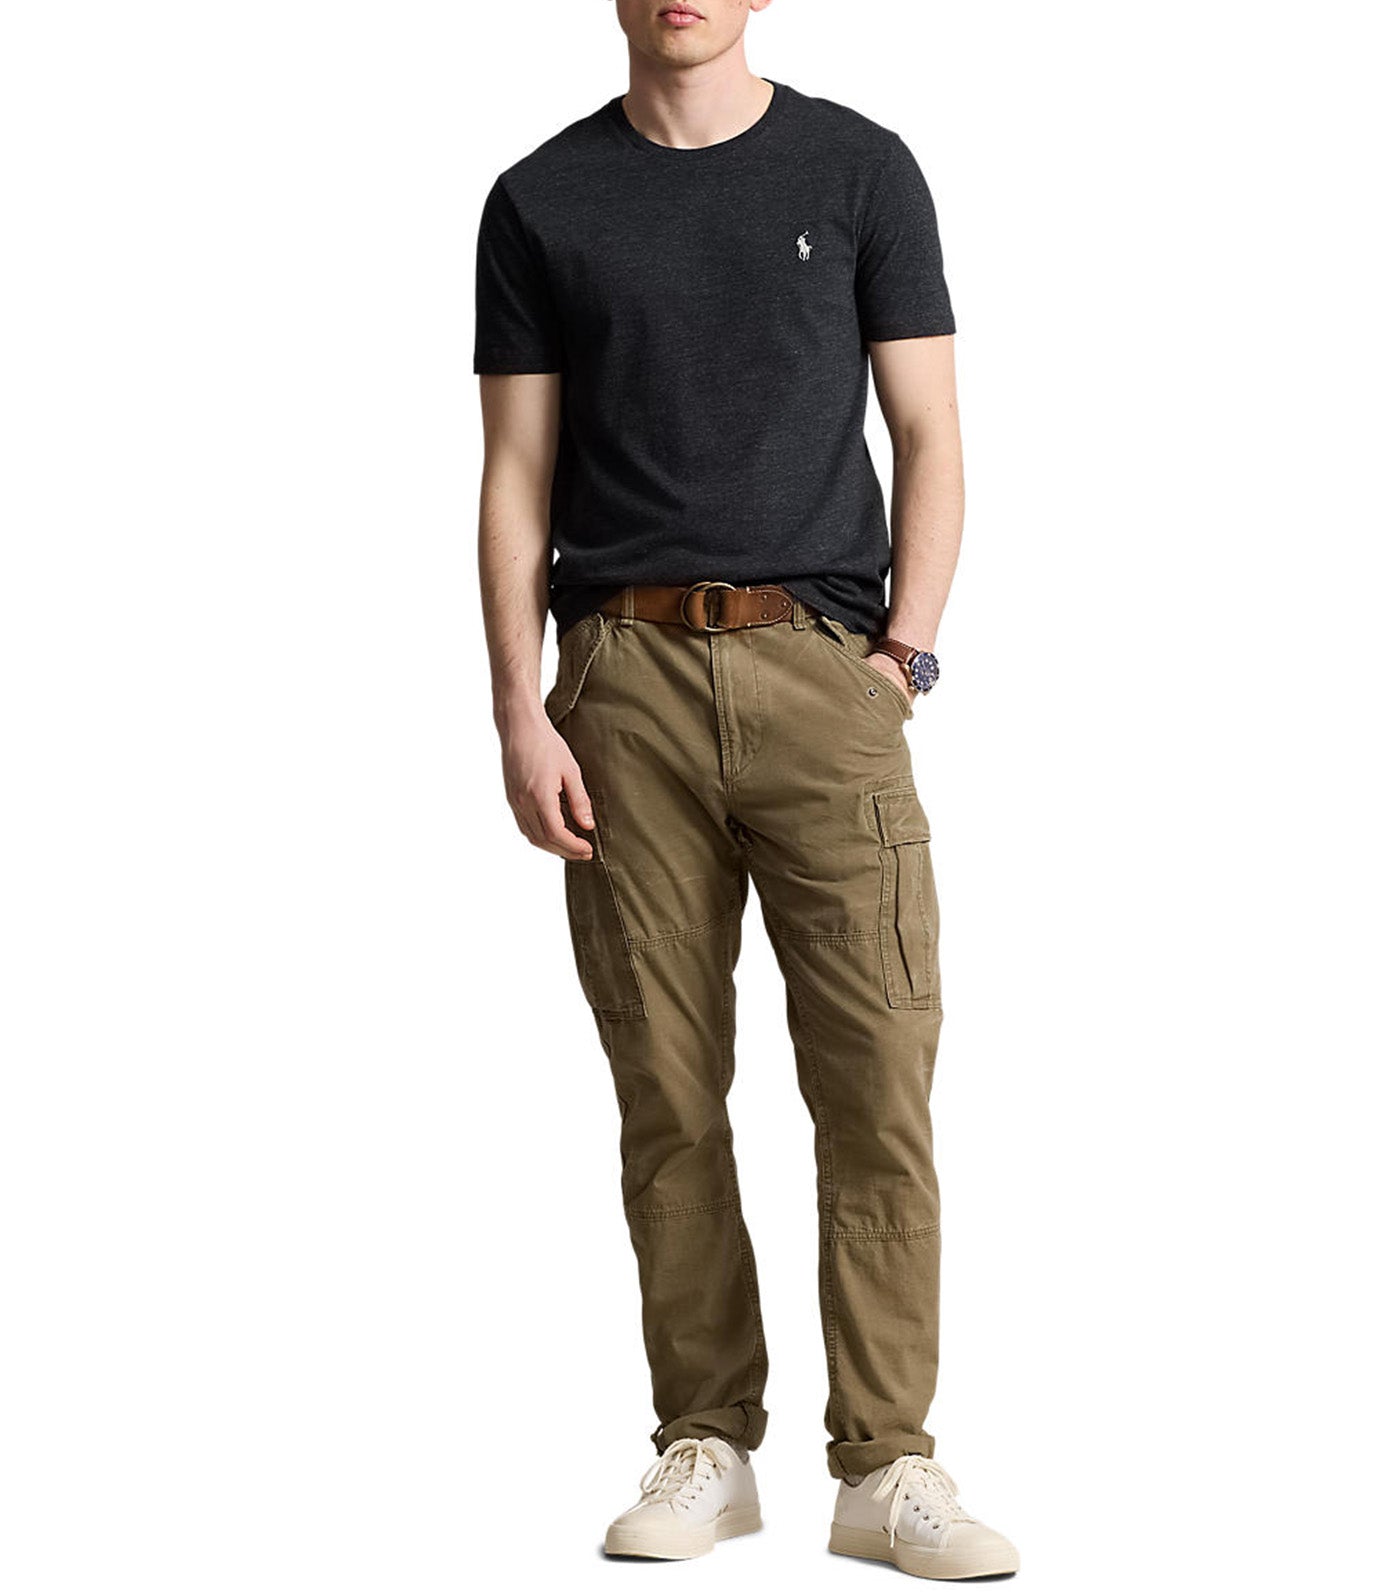 Men's Custom Slim Fit Jersey Crewneck T-Shirt Black Marl Heather